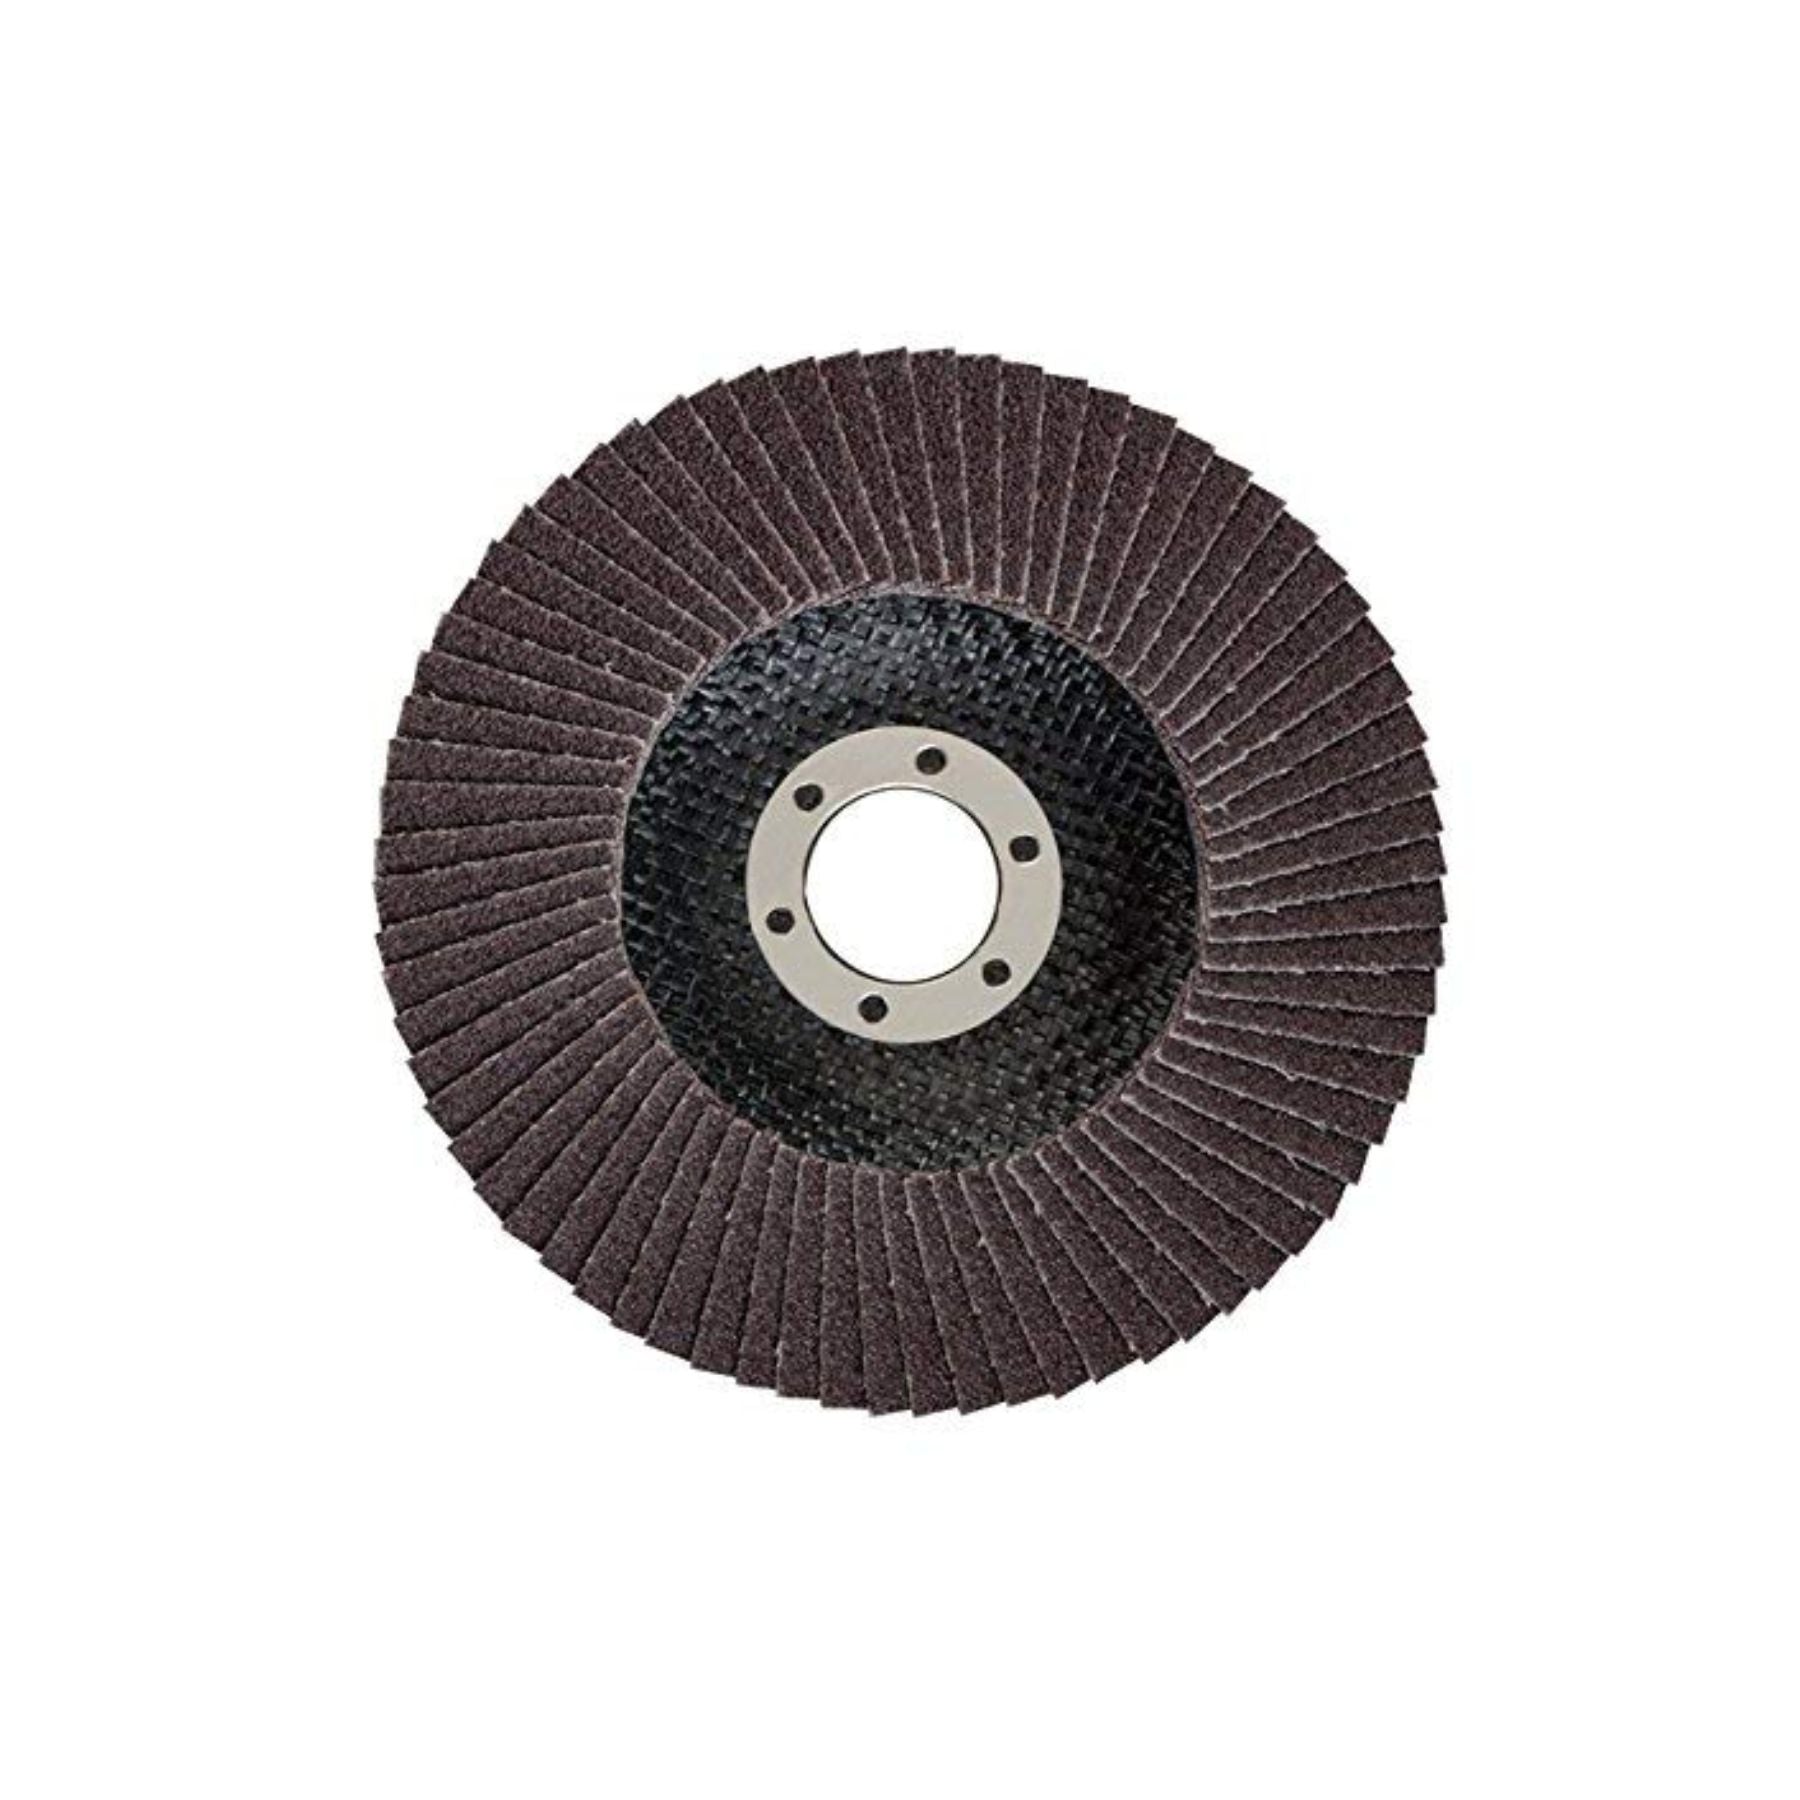 Bosch (2608621839) Grinding & polishing Flap Discs 100mm 60Grit Pack of 10 pcs